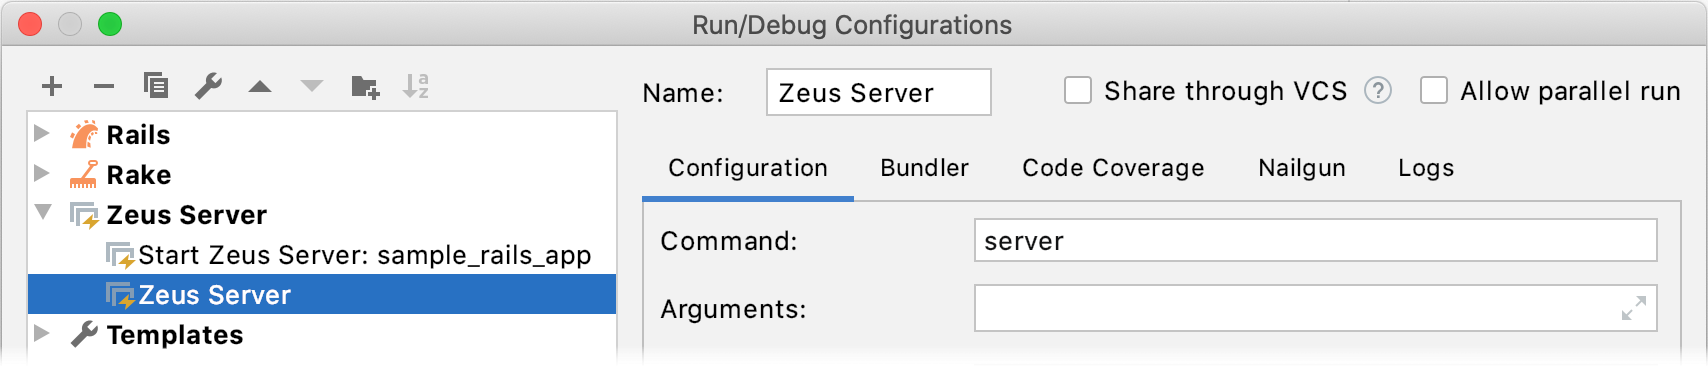 Run/Debug Configuration Zeus